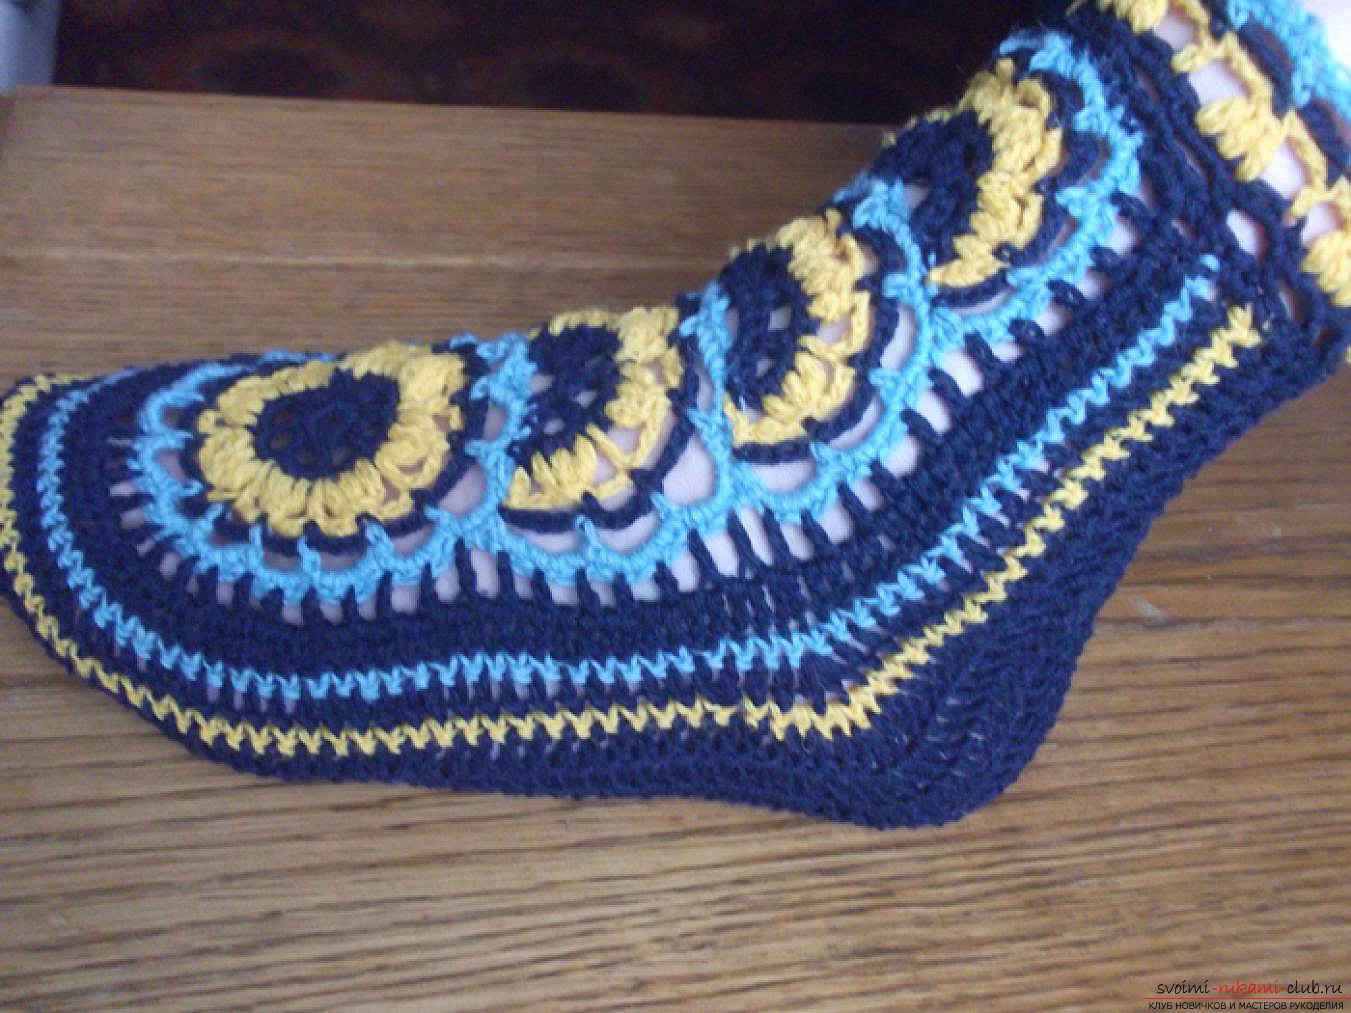 crocheted charming socks. Photo №4